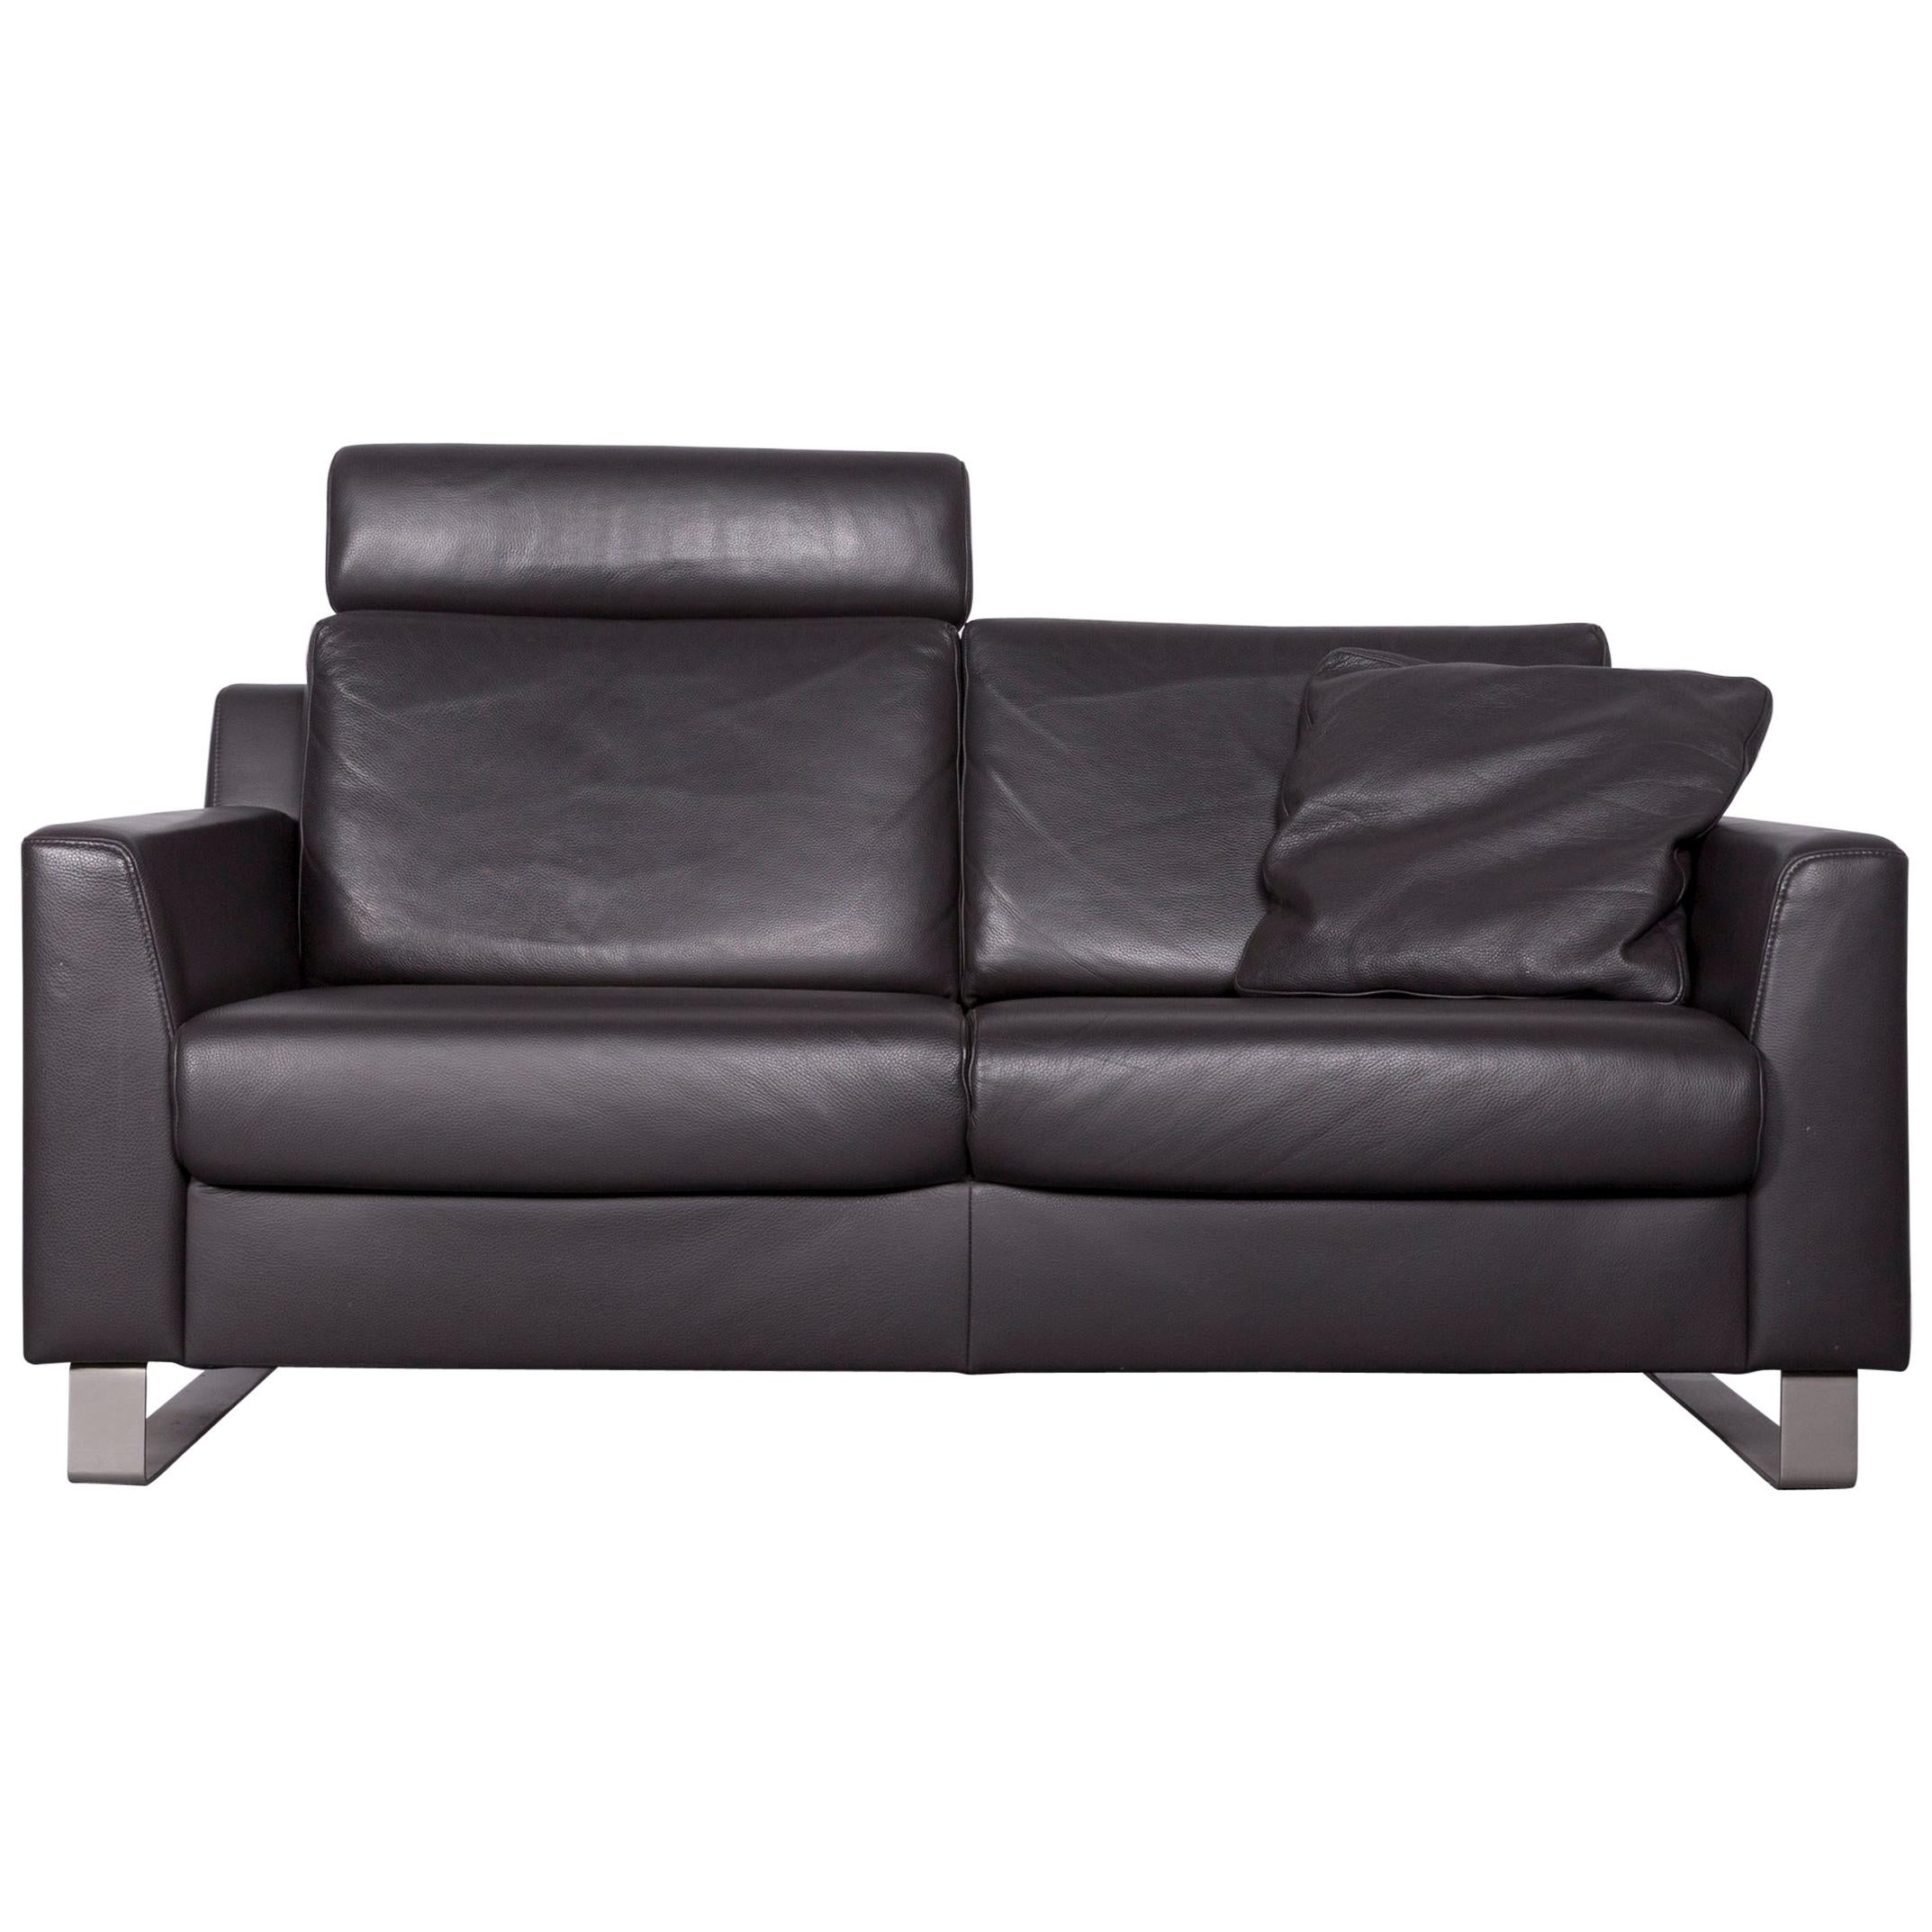 Ewald Schillig Designer Sofa Brown Couch Leather